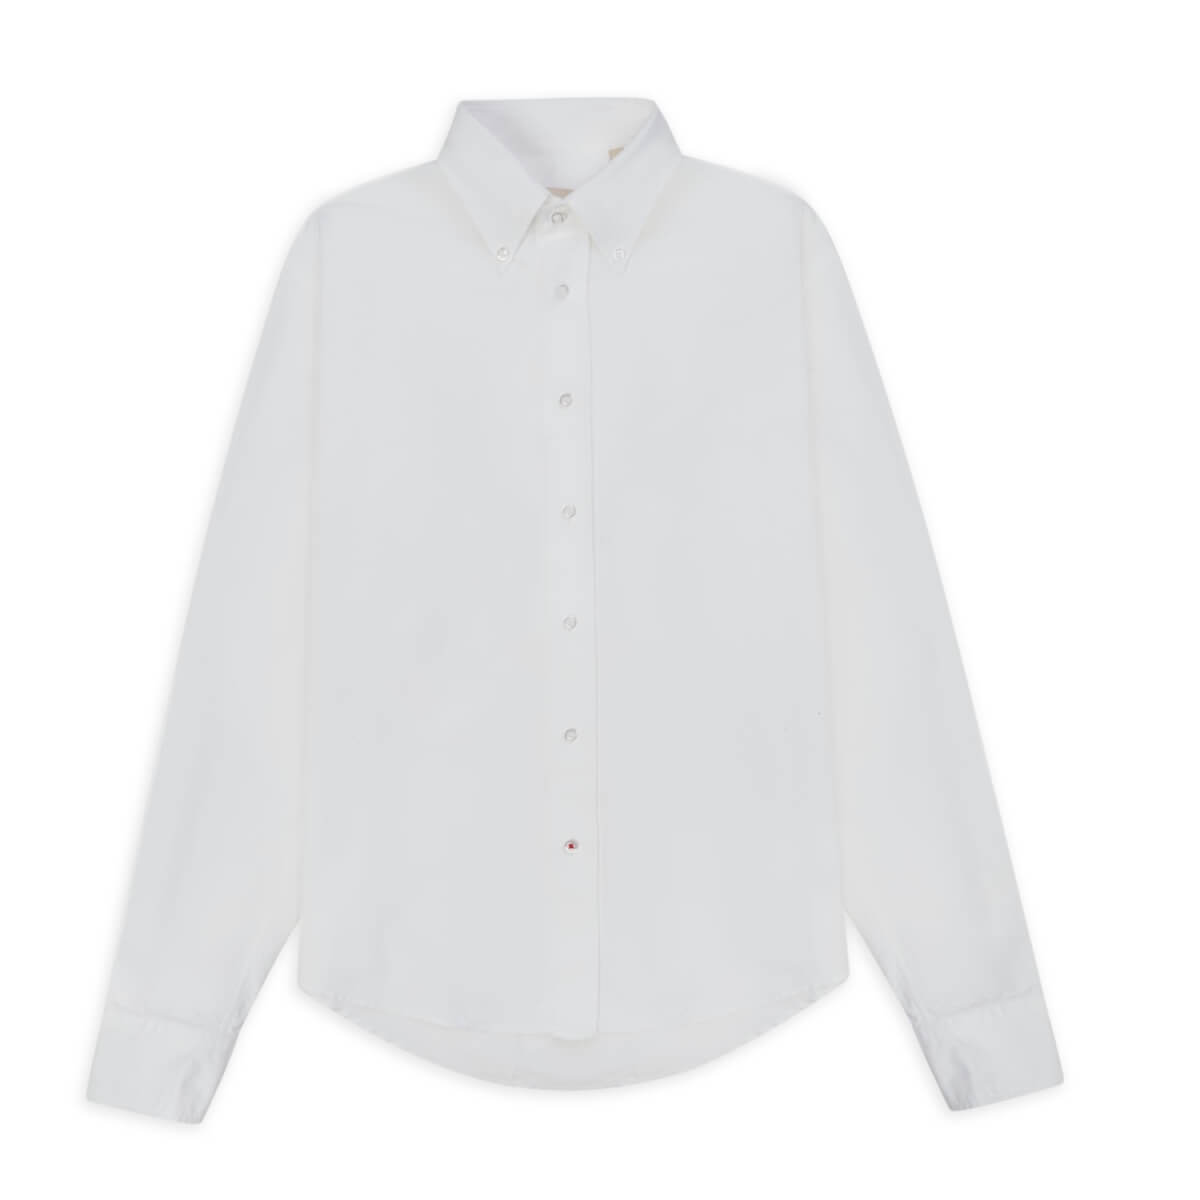 Men's Oxford Button-Down Shirt - White Small Burrows & Hare